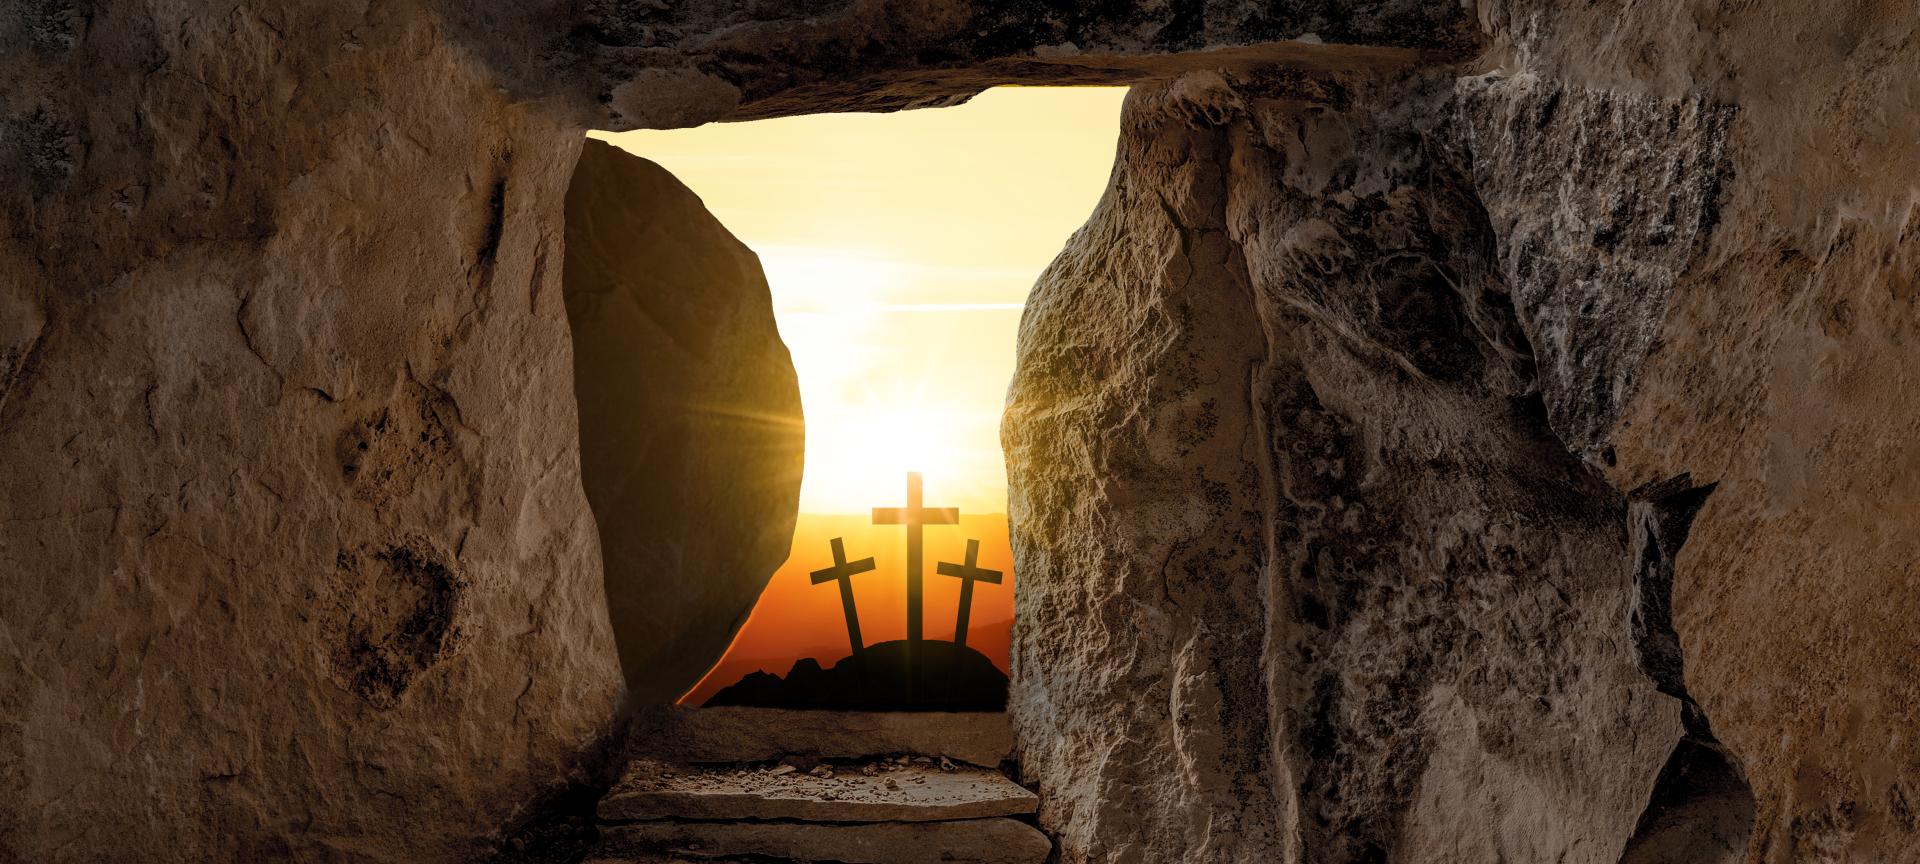 Sretan i blagoslovljen Uskrs